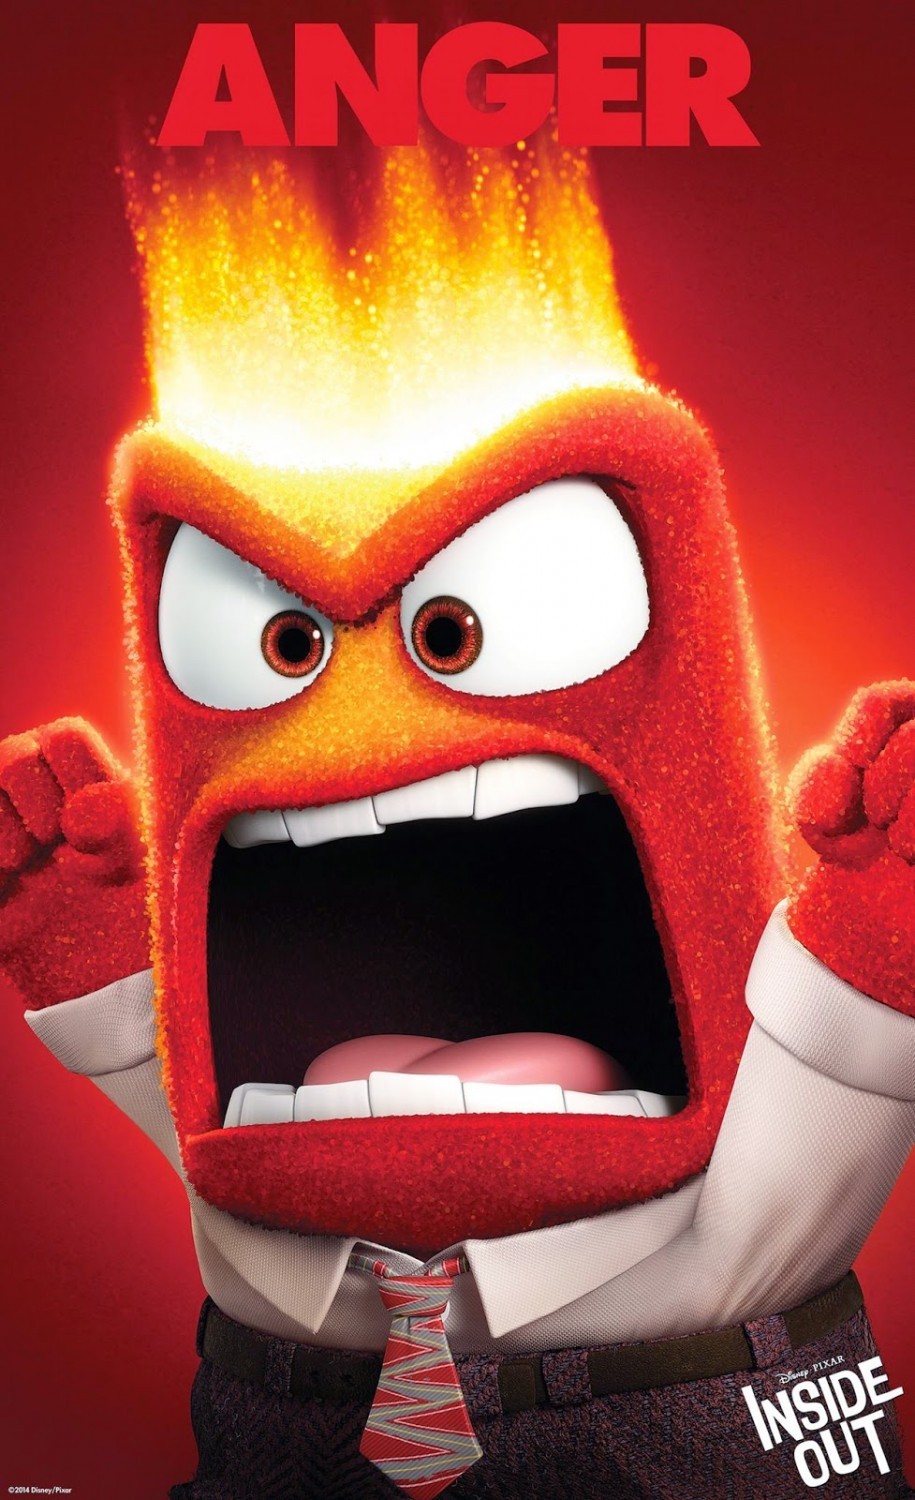 Anger di Inside Out @pixarstudio